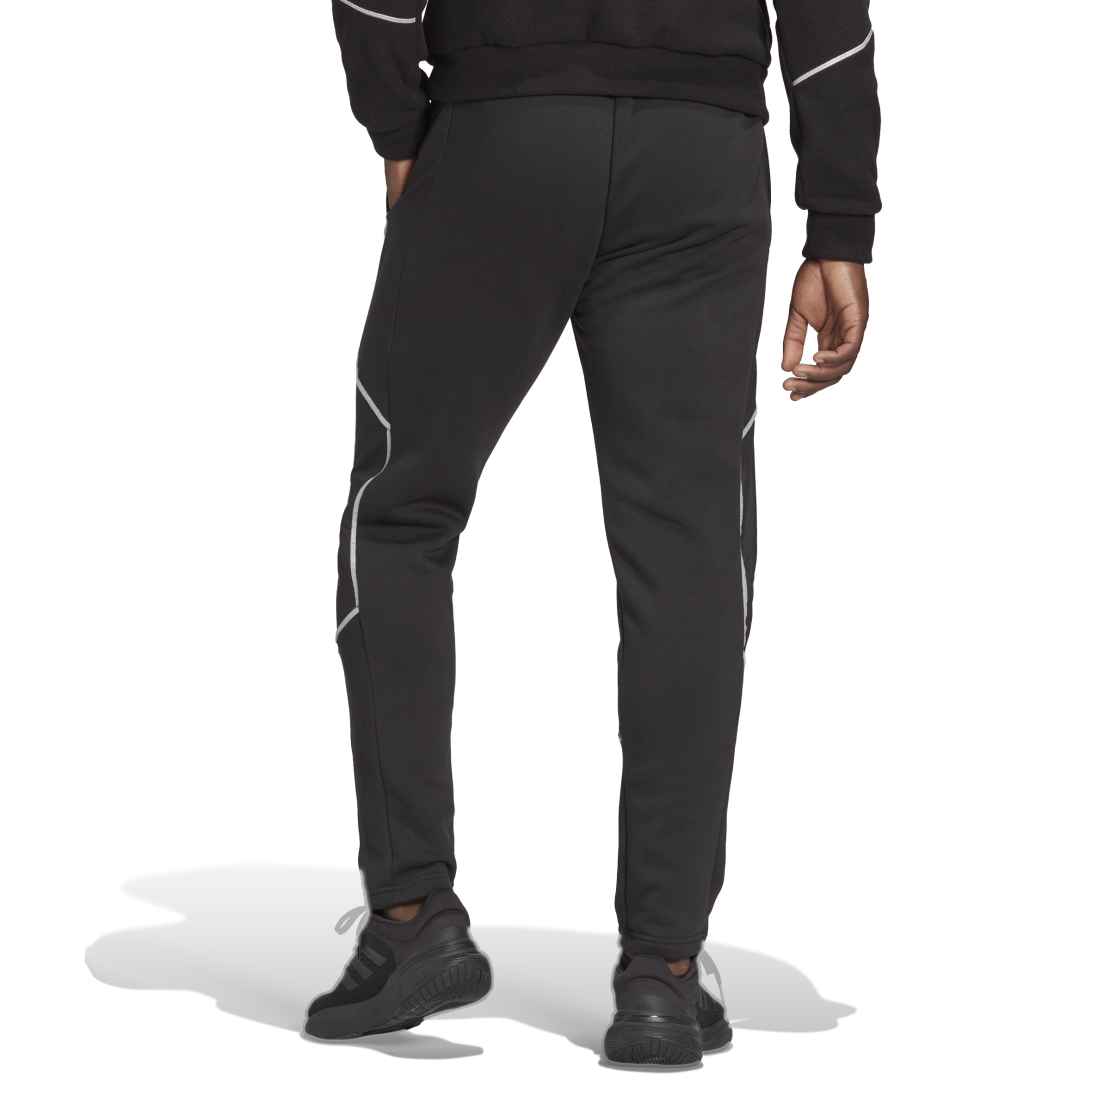 מכנס אדידס חורפי לגבר | Adidas Q4 Fleece Pants